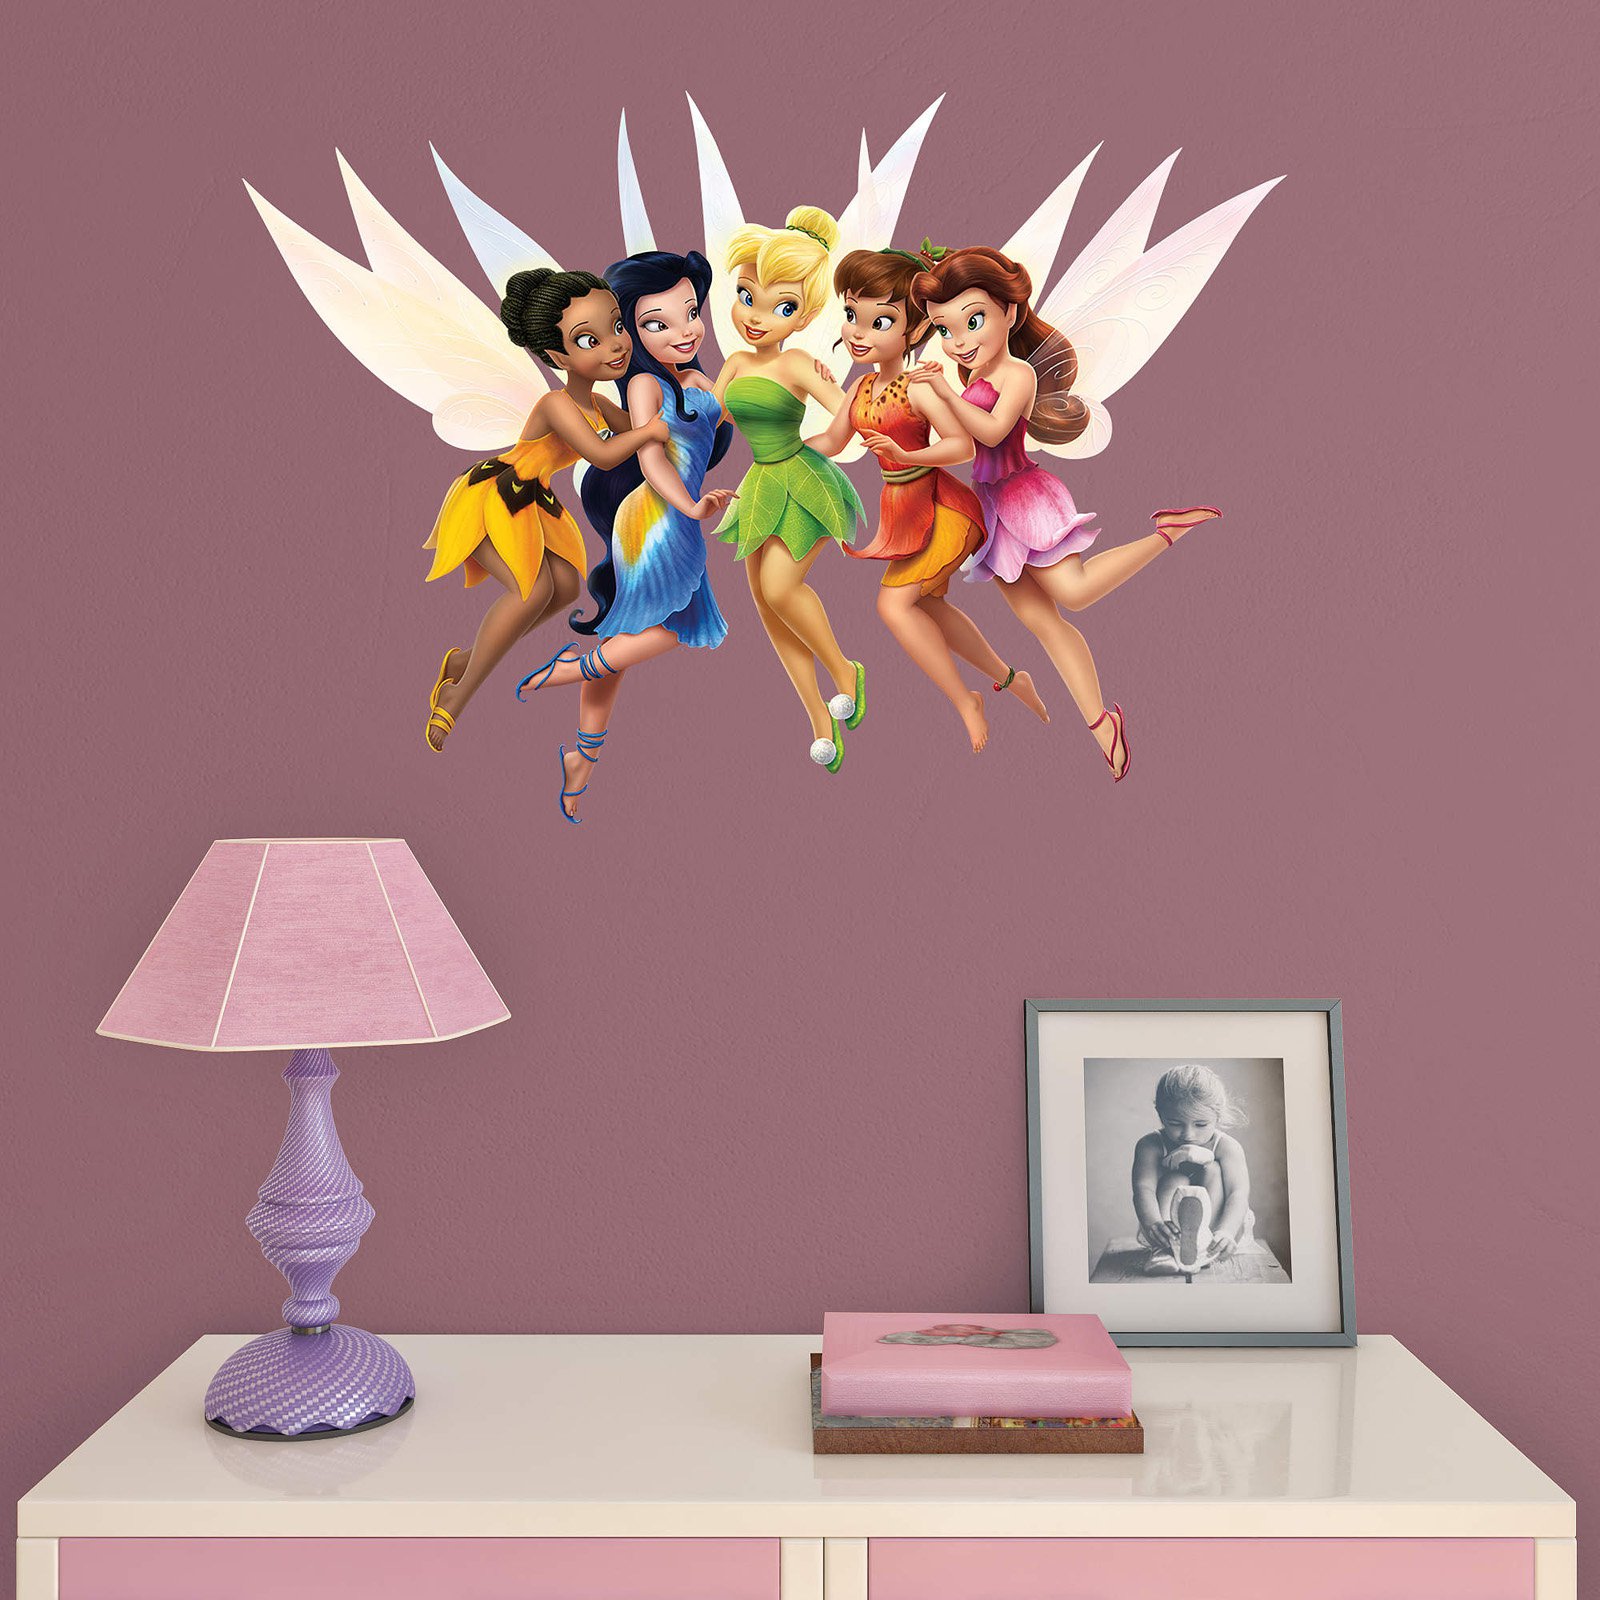 Fathead Jr Disney Fairies Wall Decal - image 1 of 2